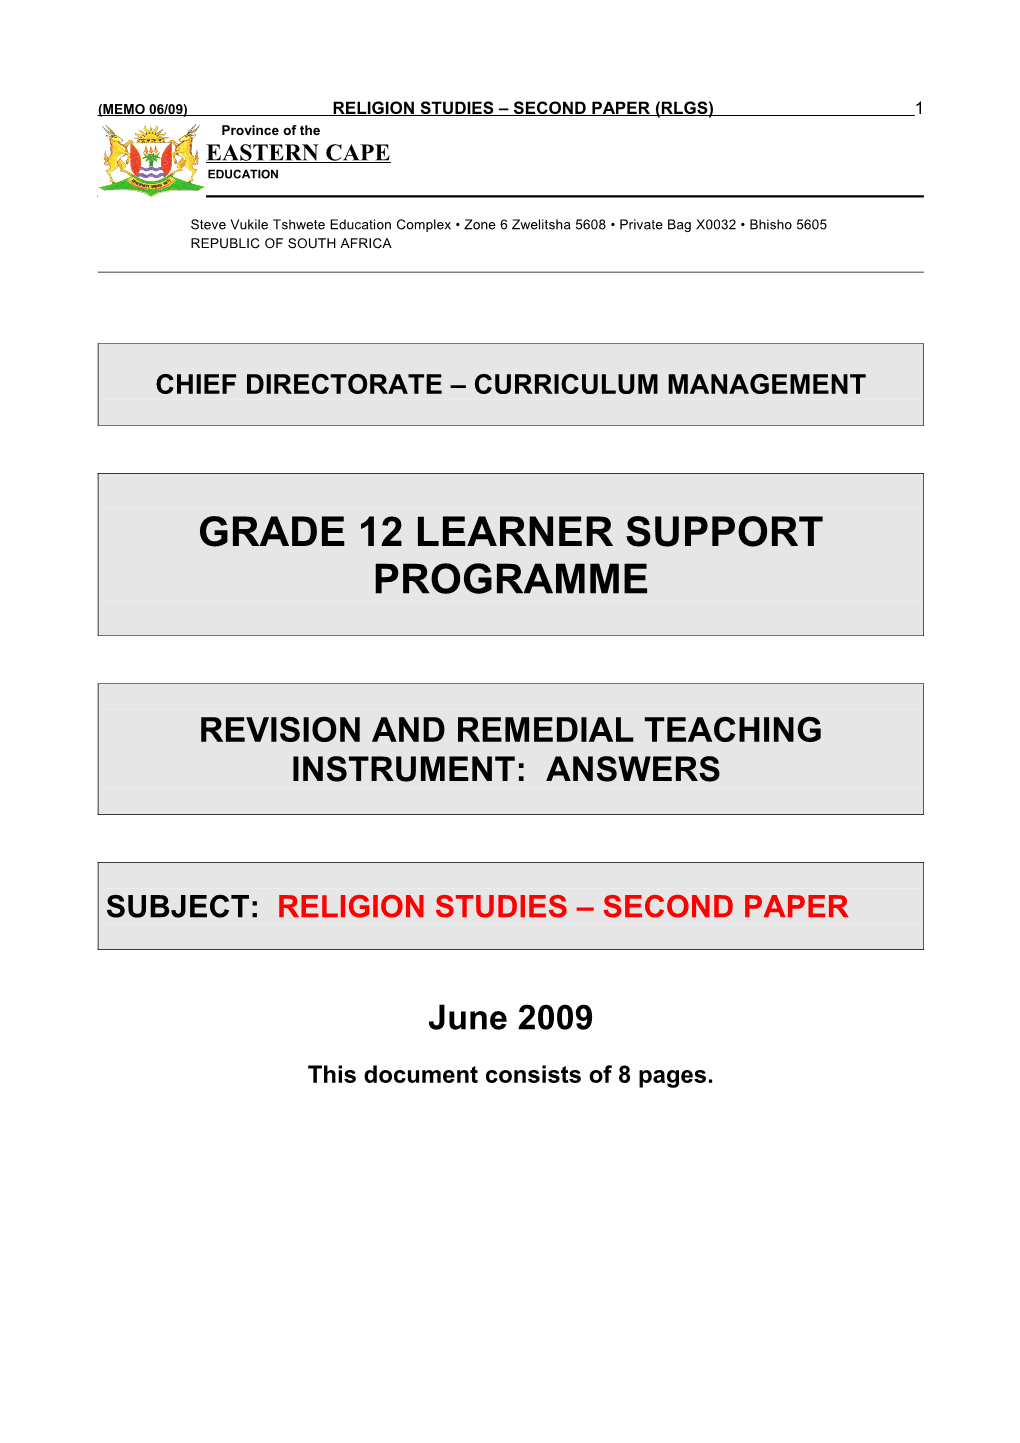 (Memo 06/09) Religion Studies Second Paper (Rlgs) 3